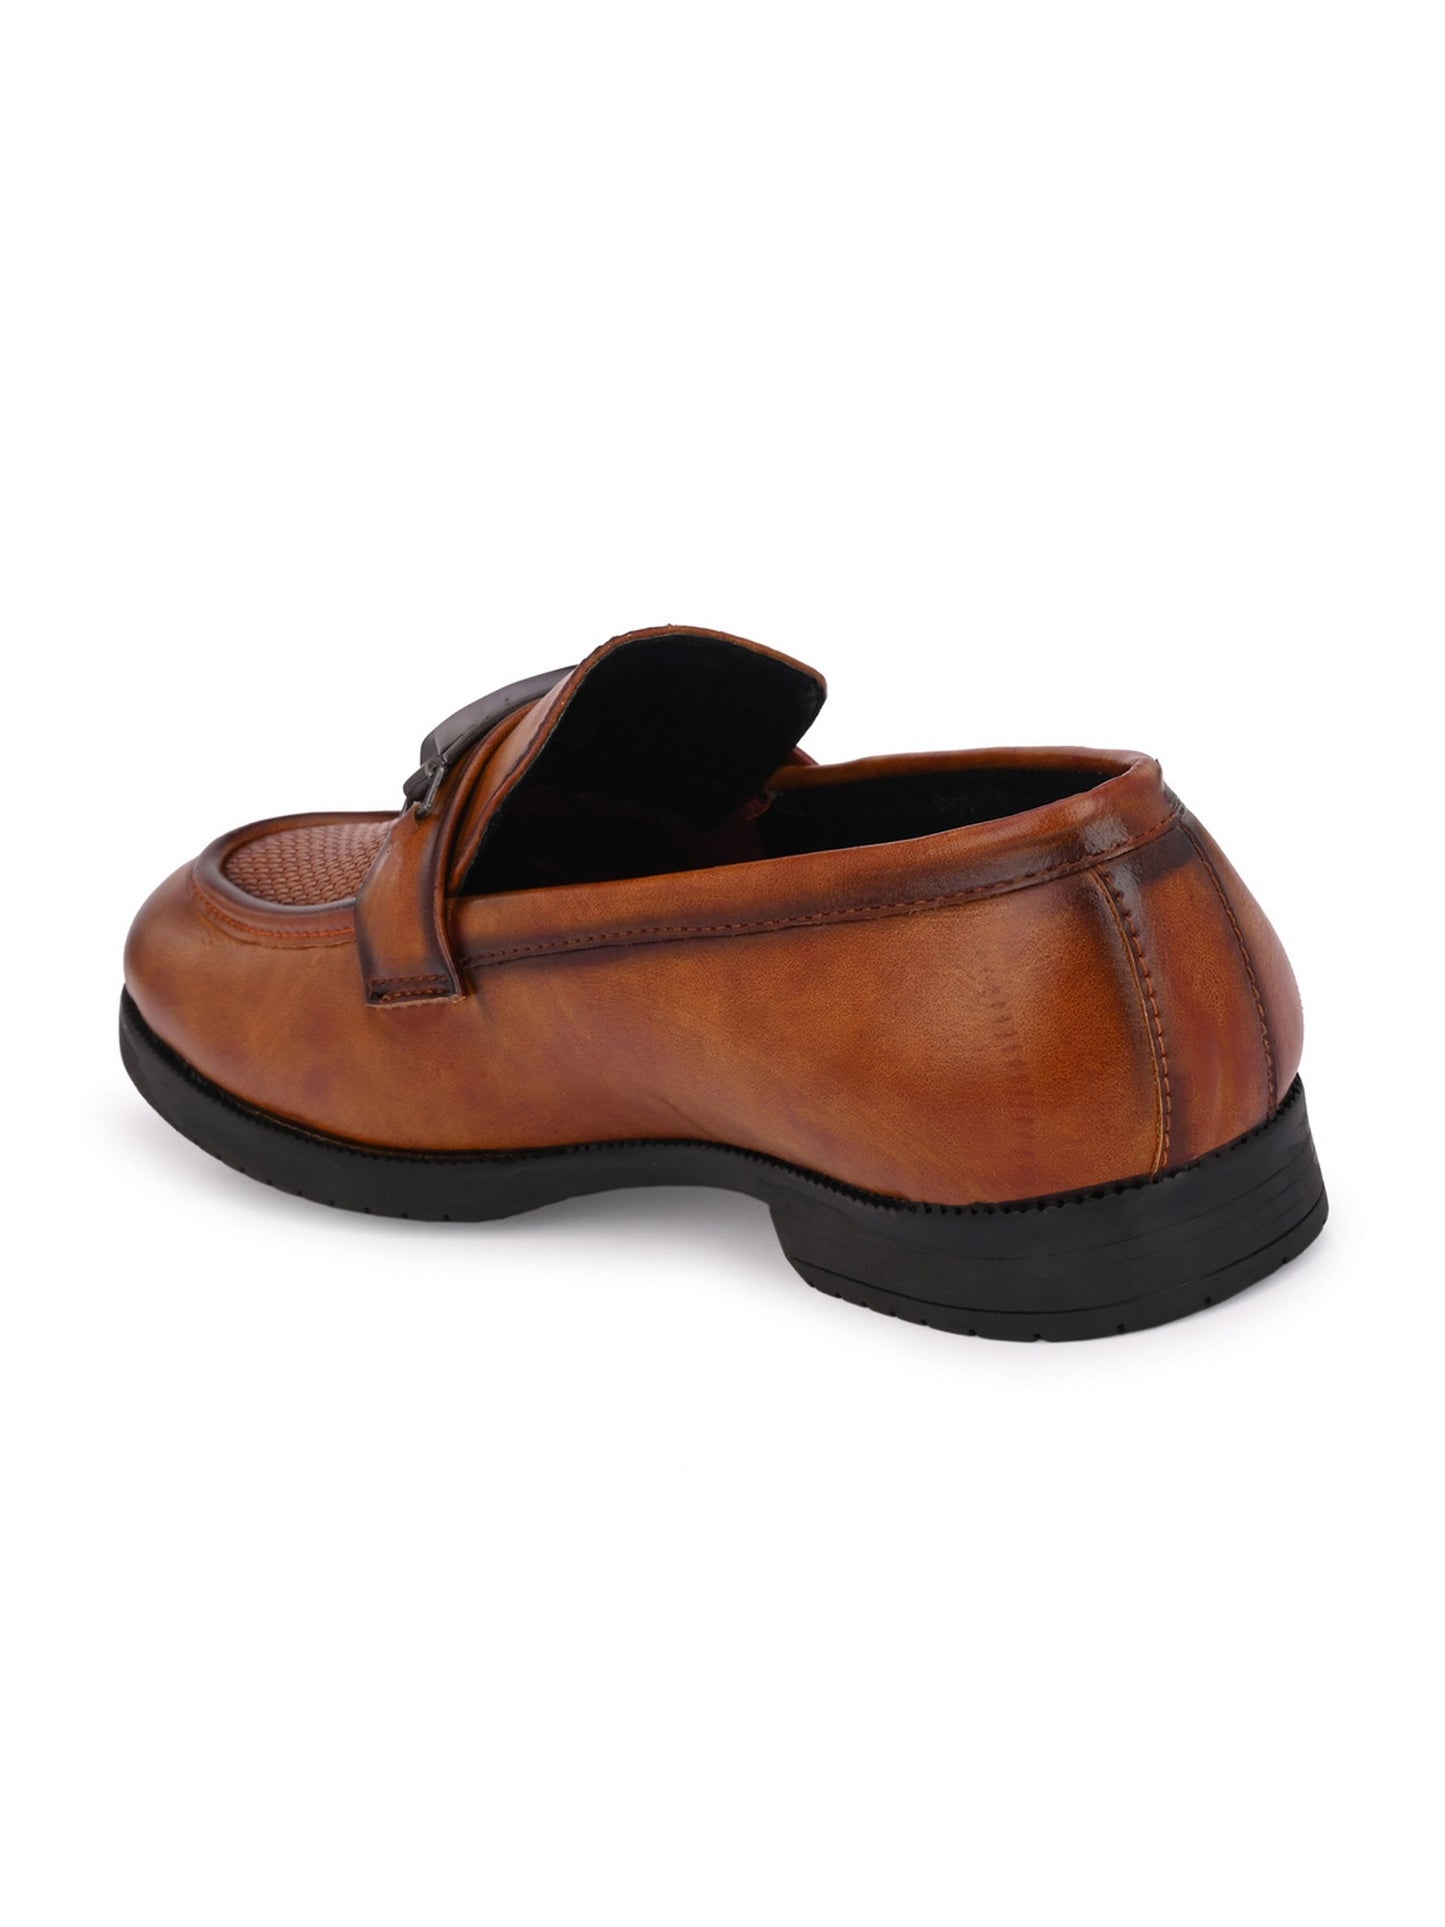 Guava Men's Tan Slip On Party Formal Shoes (GV15JA789)